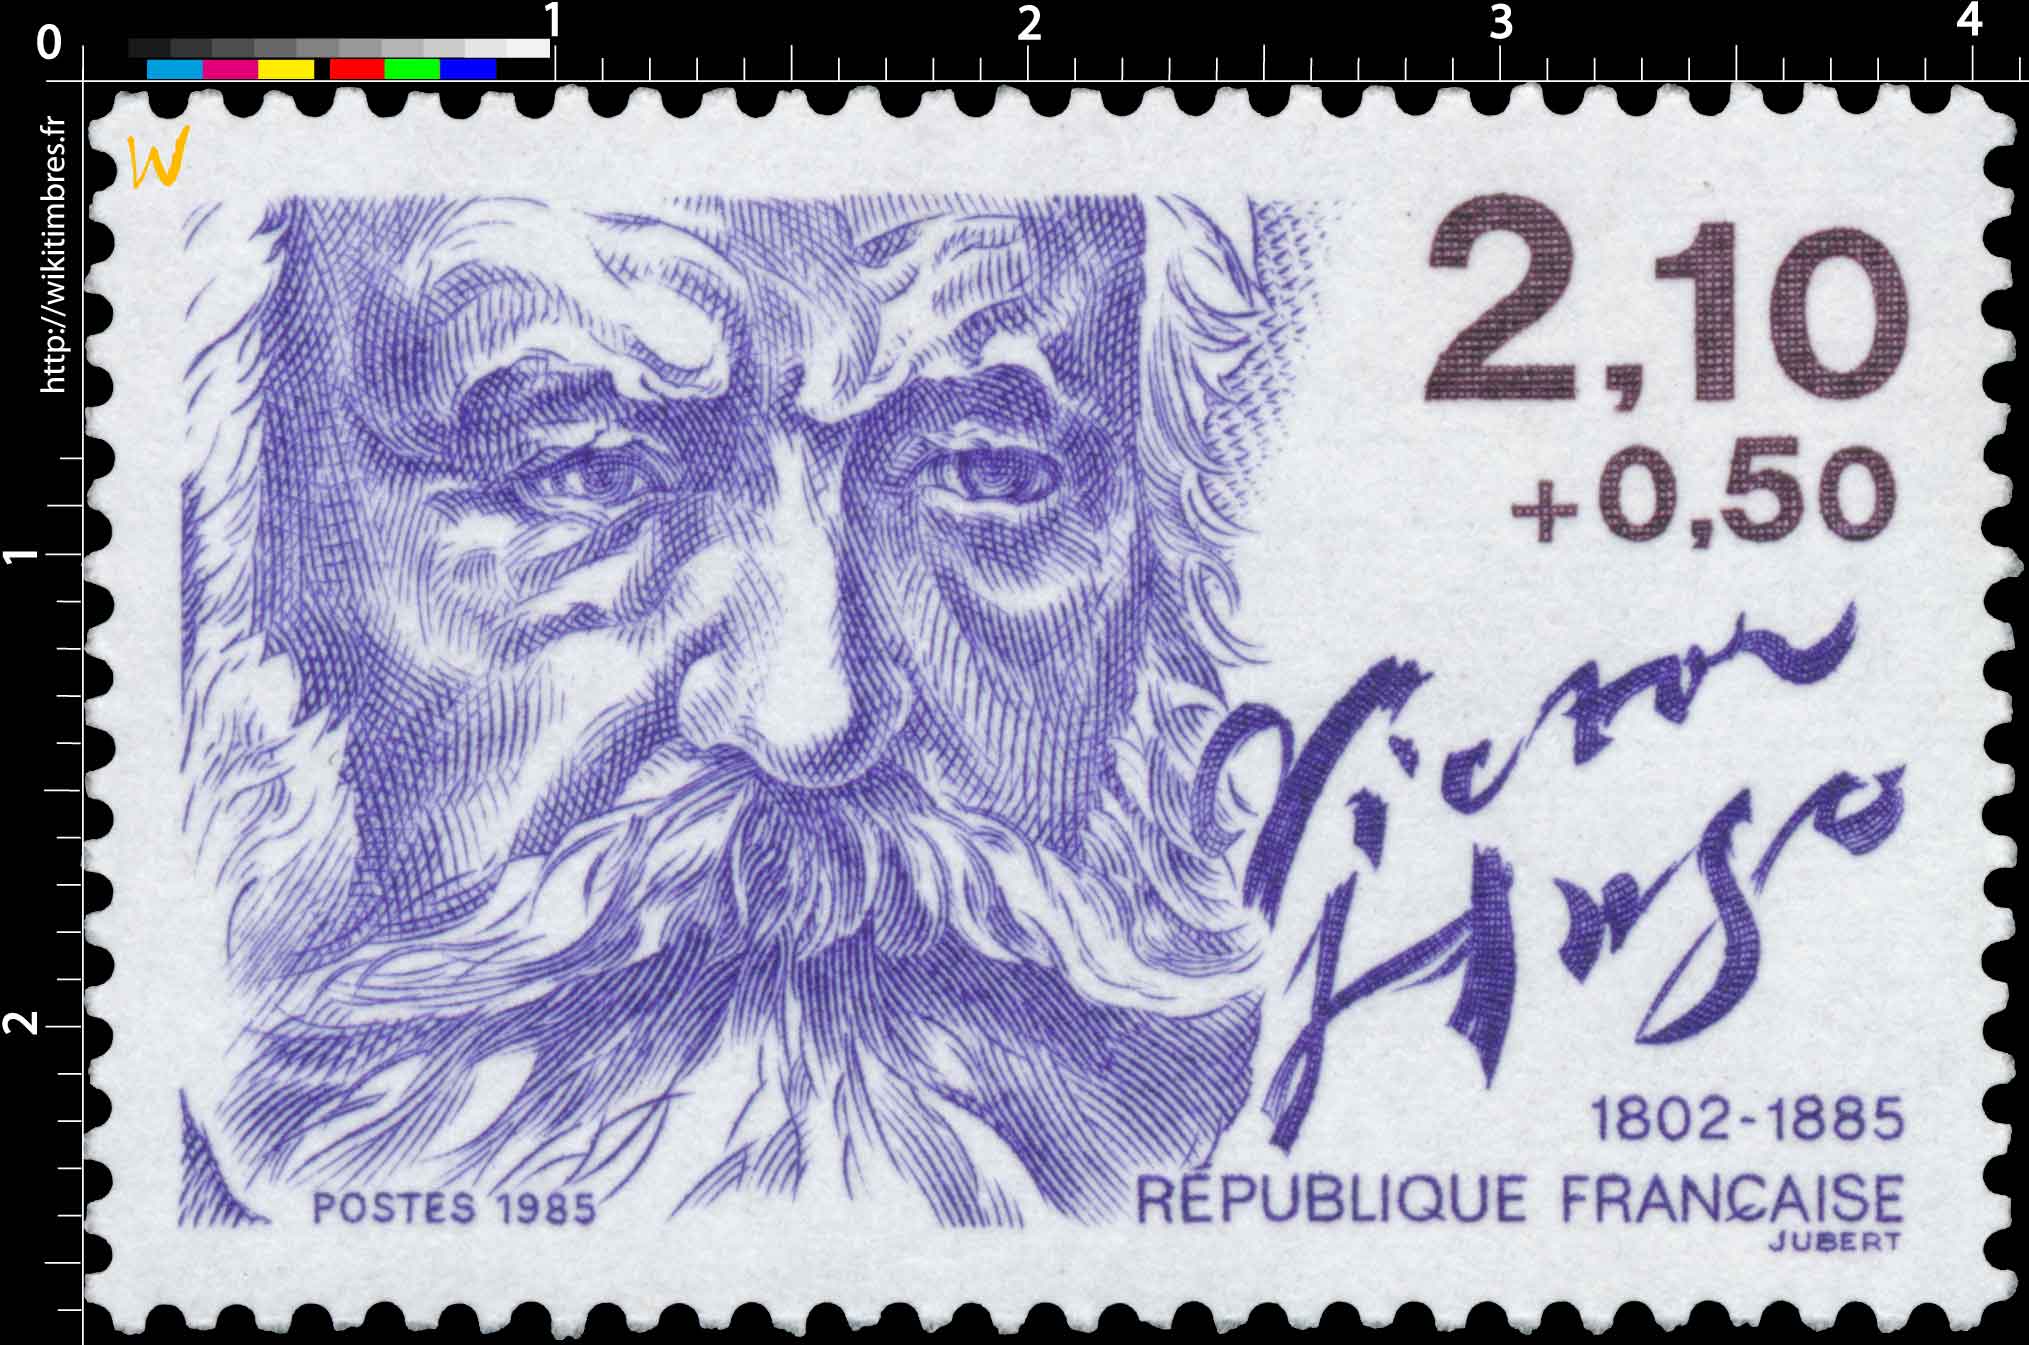 1985 Victor Hugo 1802-1885